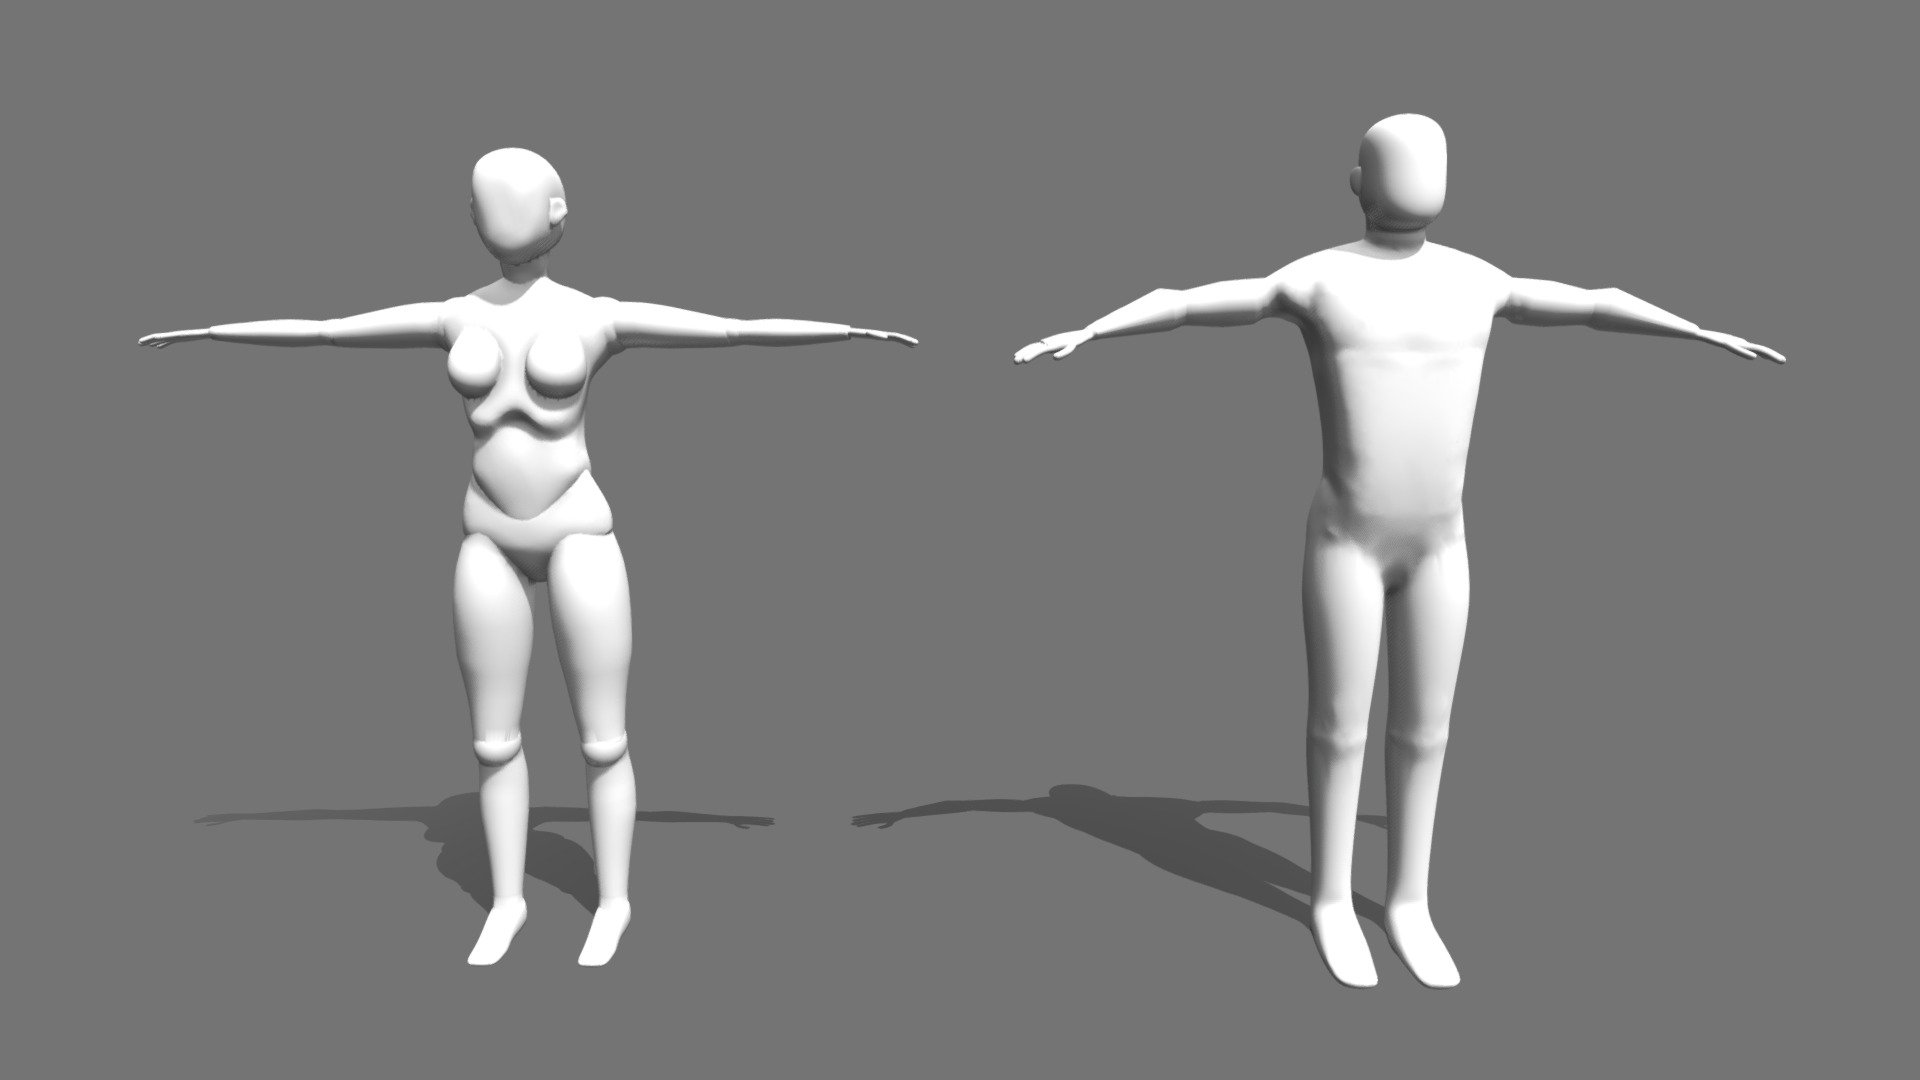 Free Human Base for Sculpting - Download Free 3D model by Ryan King Art (@ryankingart) [2149a94]